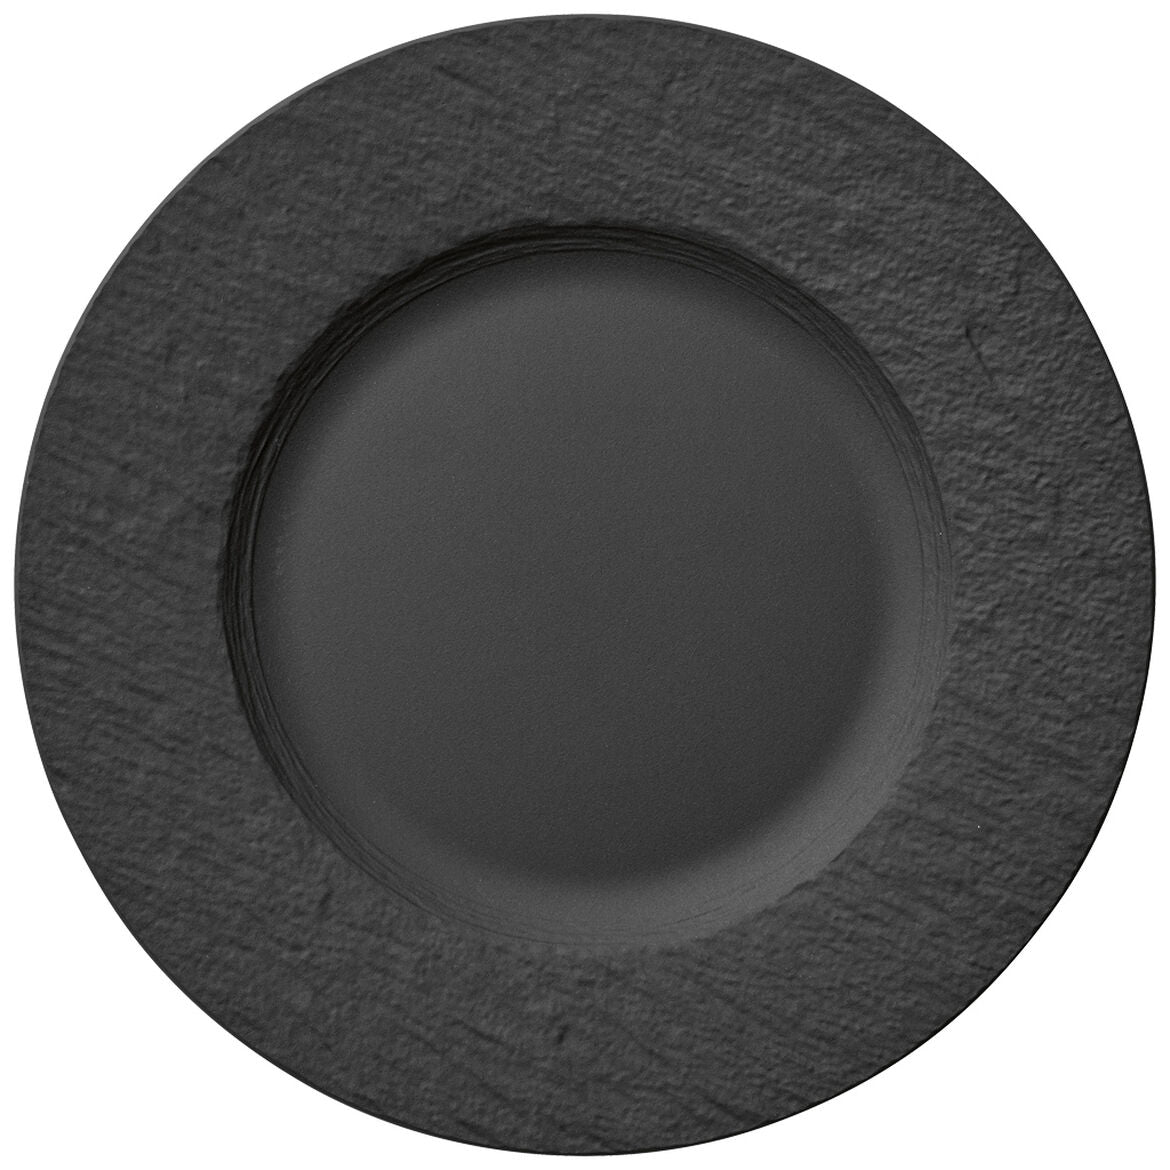 Villeroy & Boch Manufacture Rock Dinner Plate